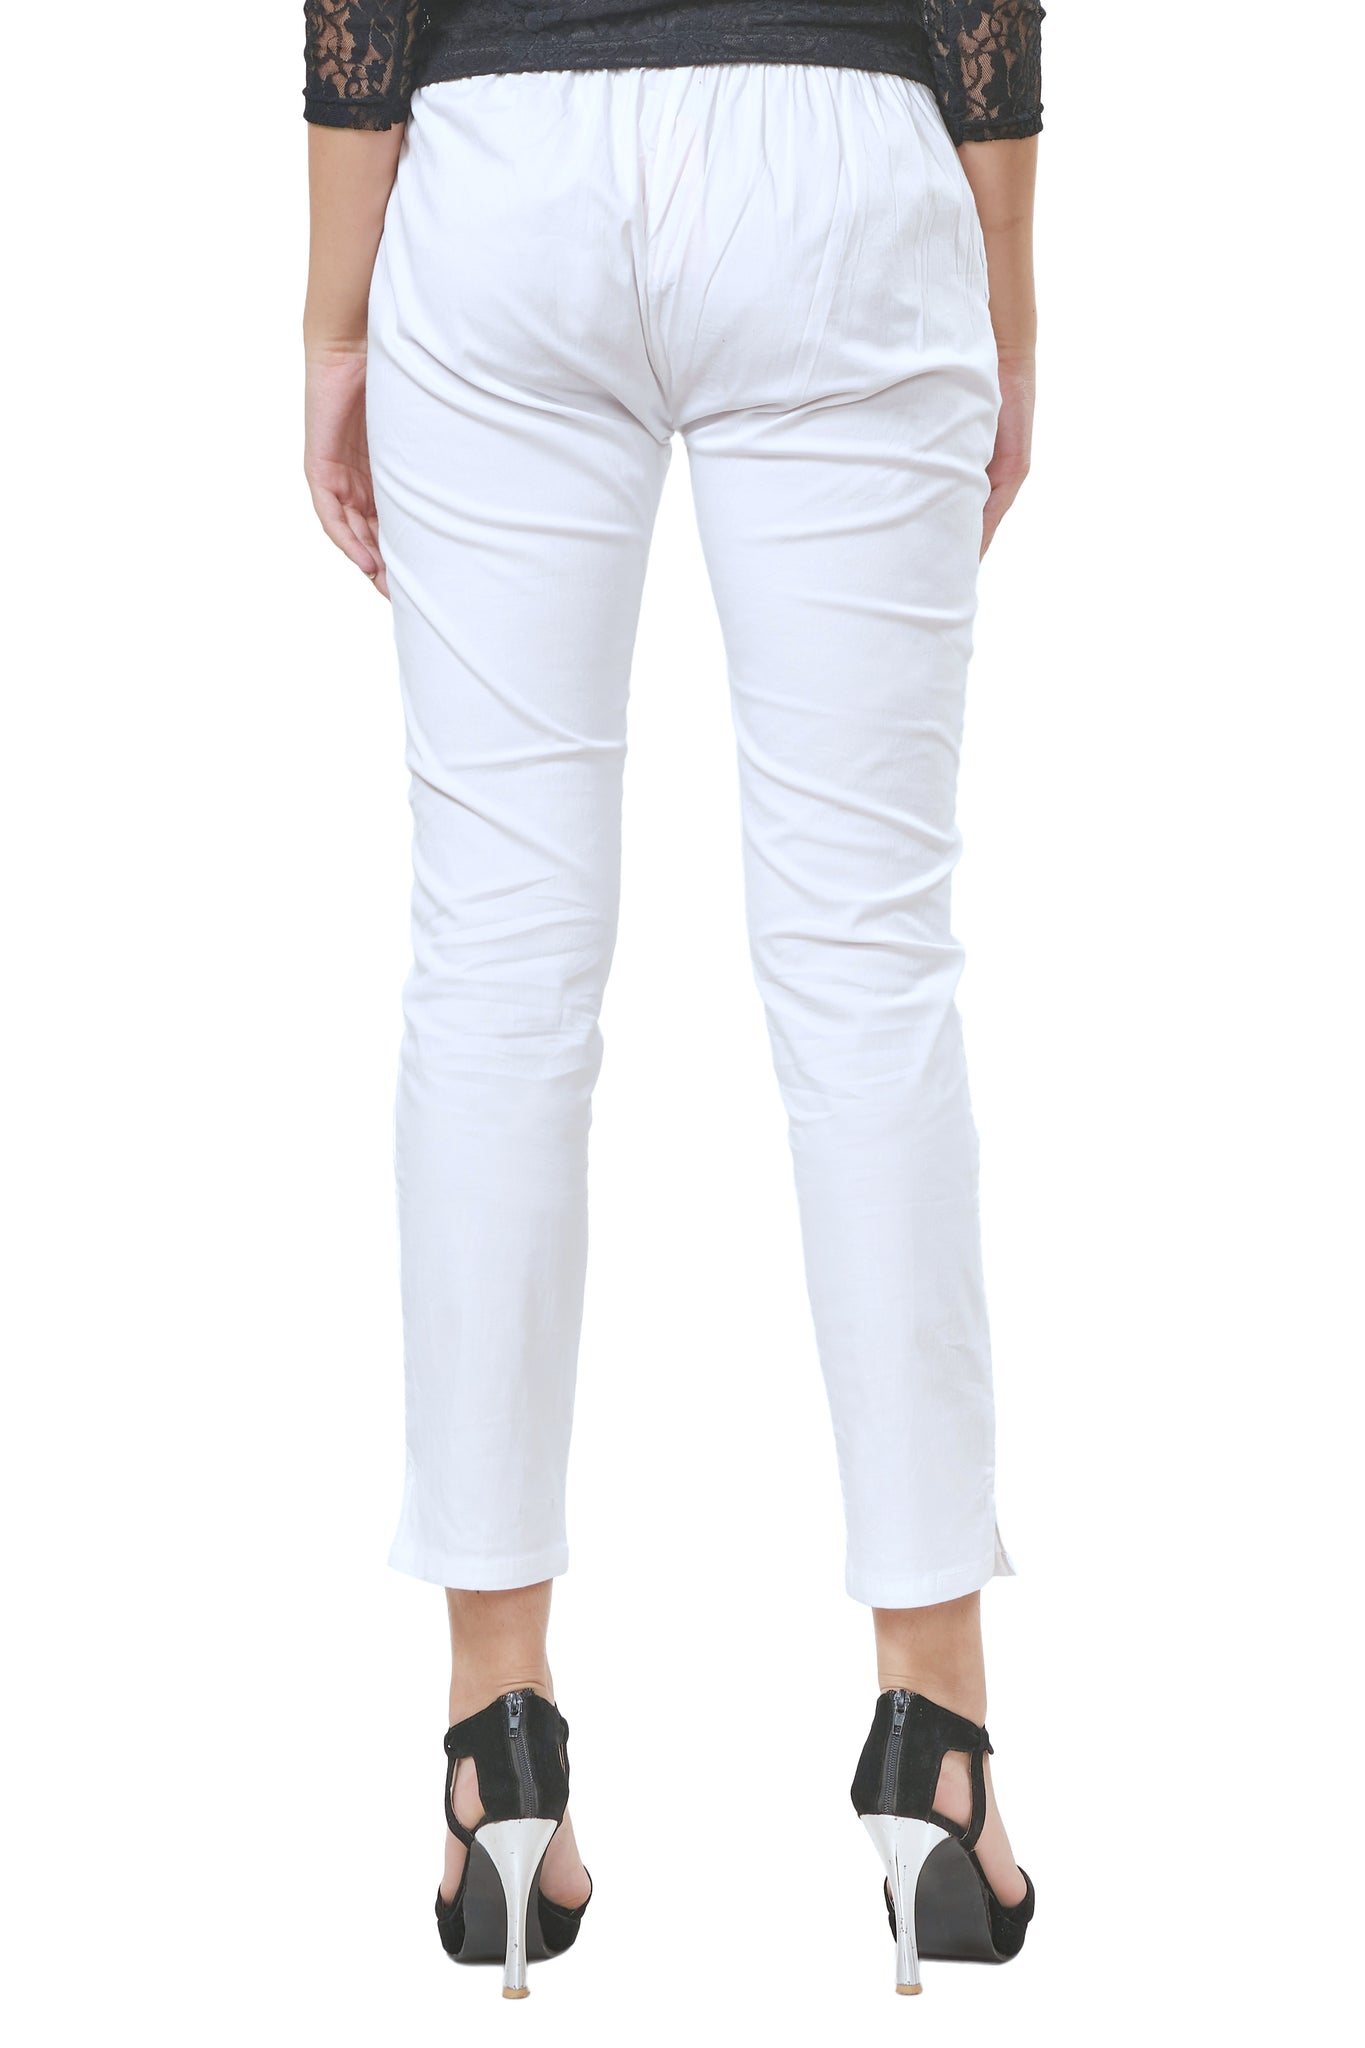 Pencil Pants (White) – Unimod Chic Fashion